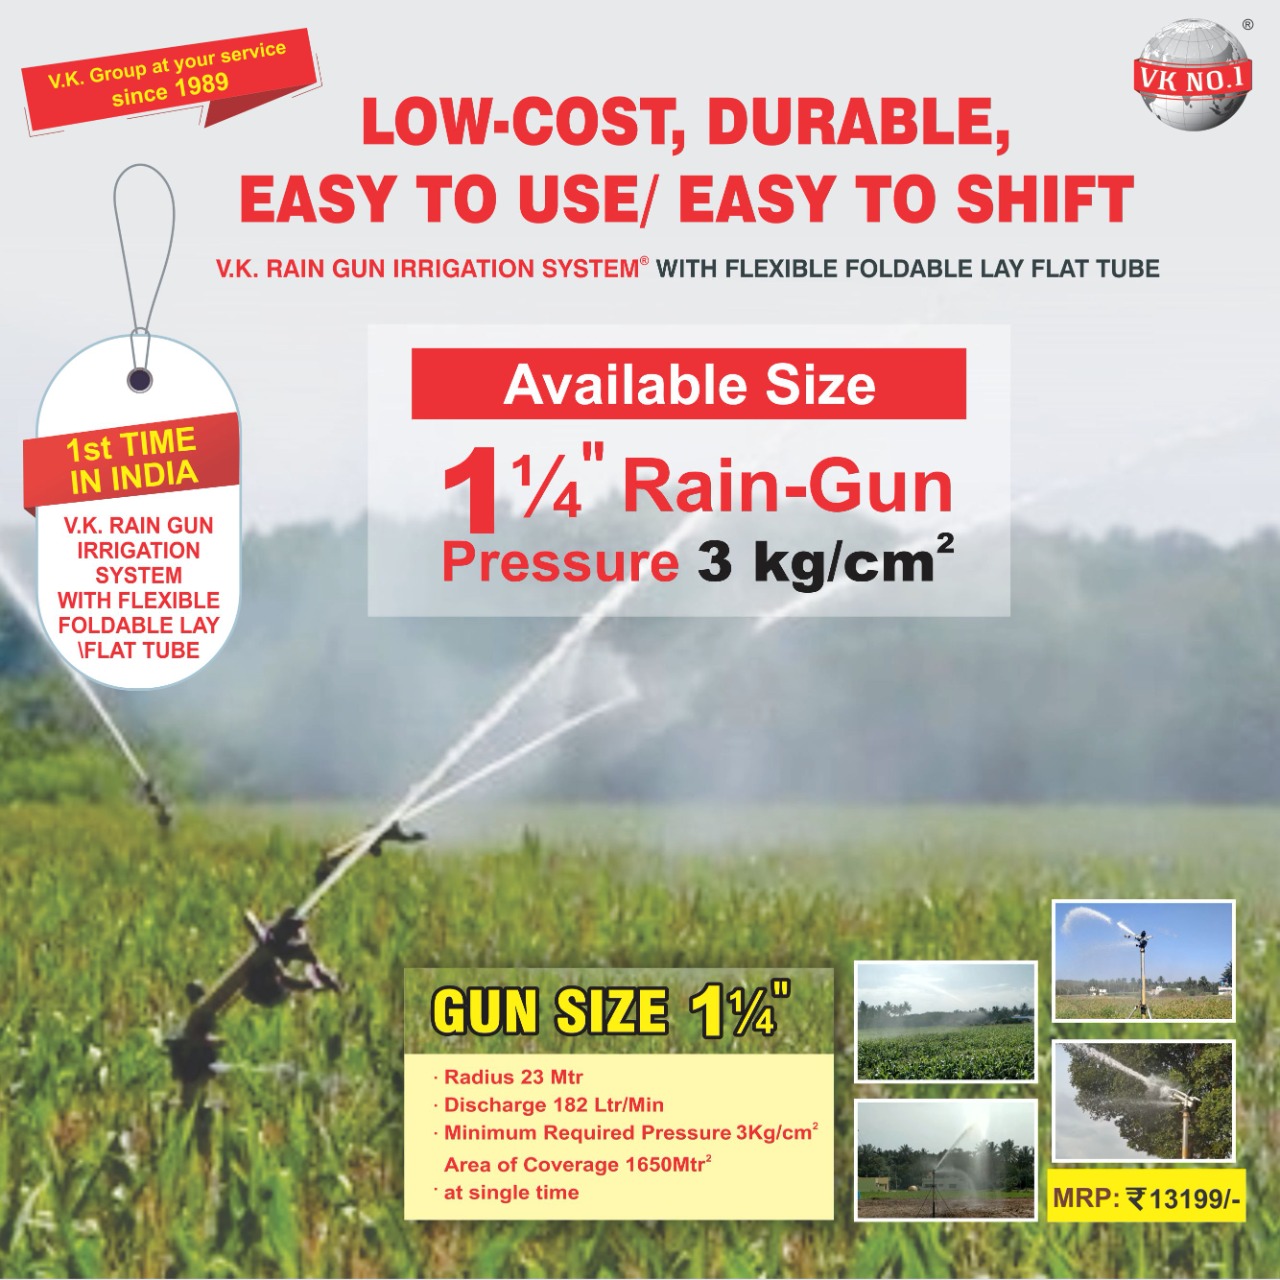 Farmers should irrigate crops with V.K Rain Gun 